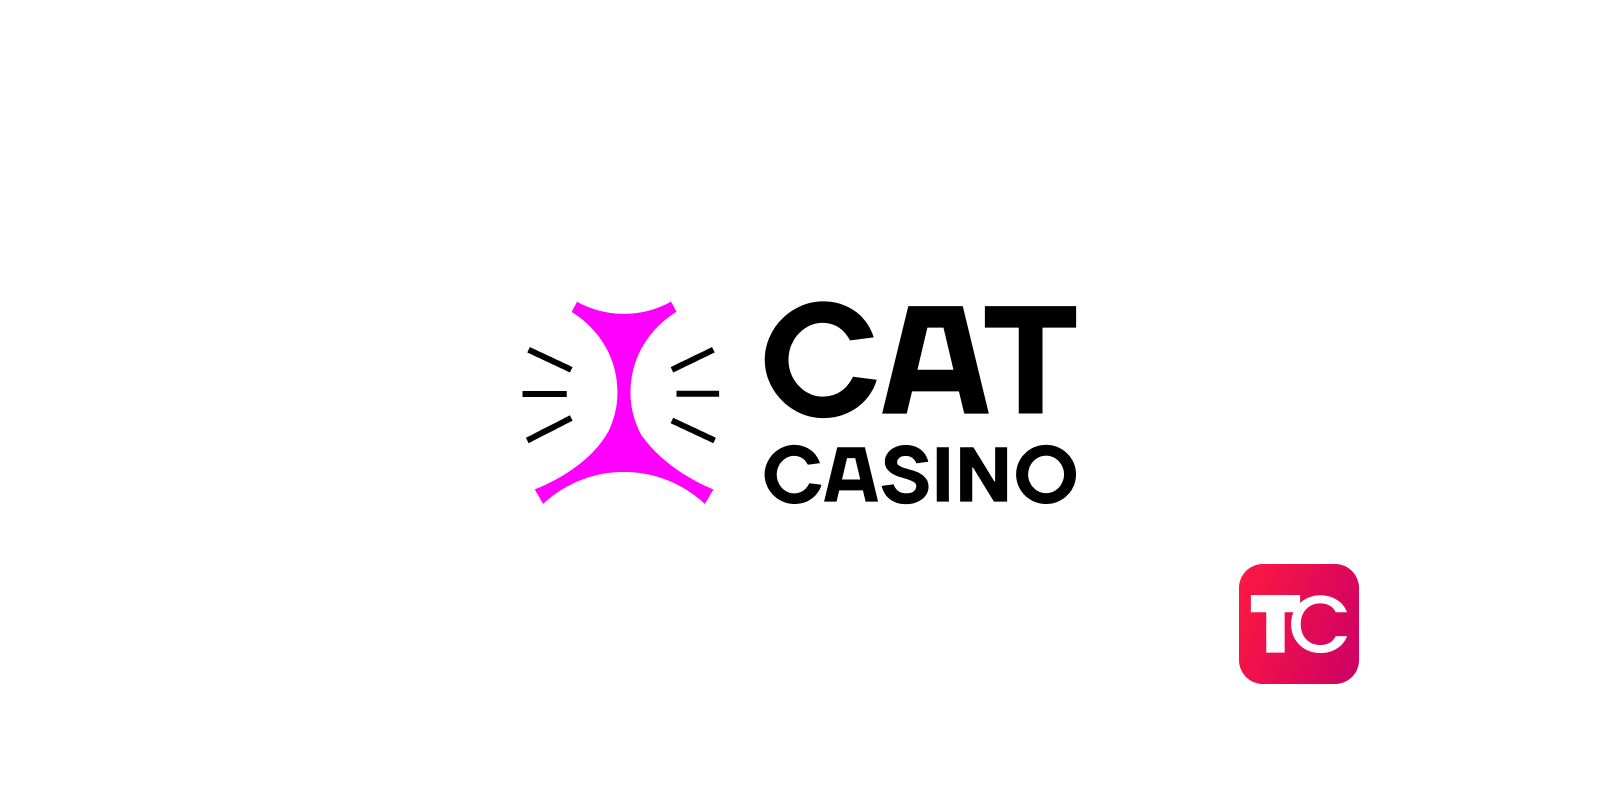 catcasino welcome bonus casino review topcasinos